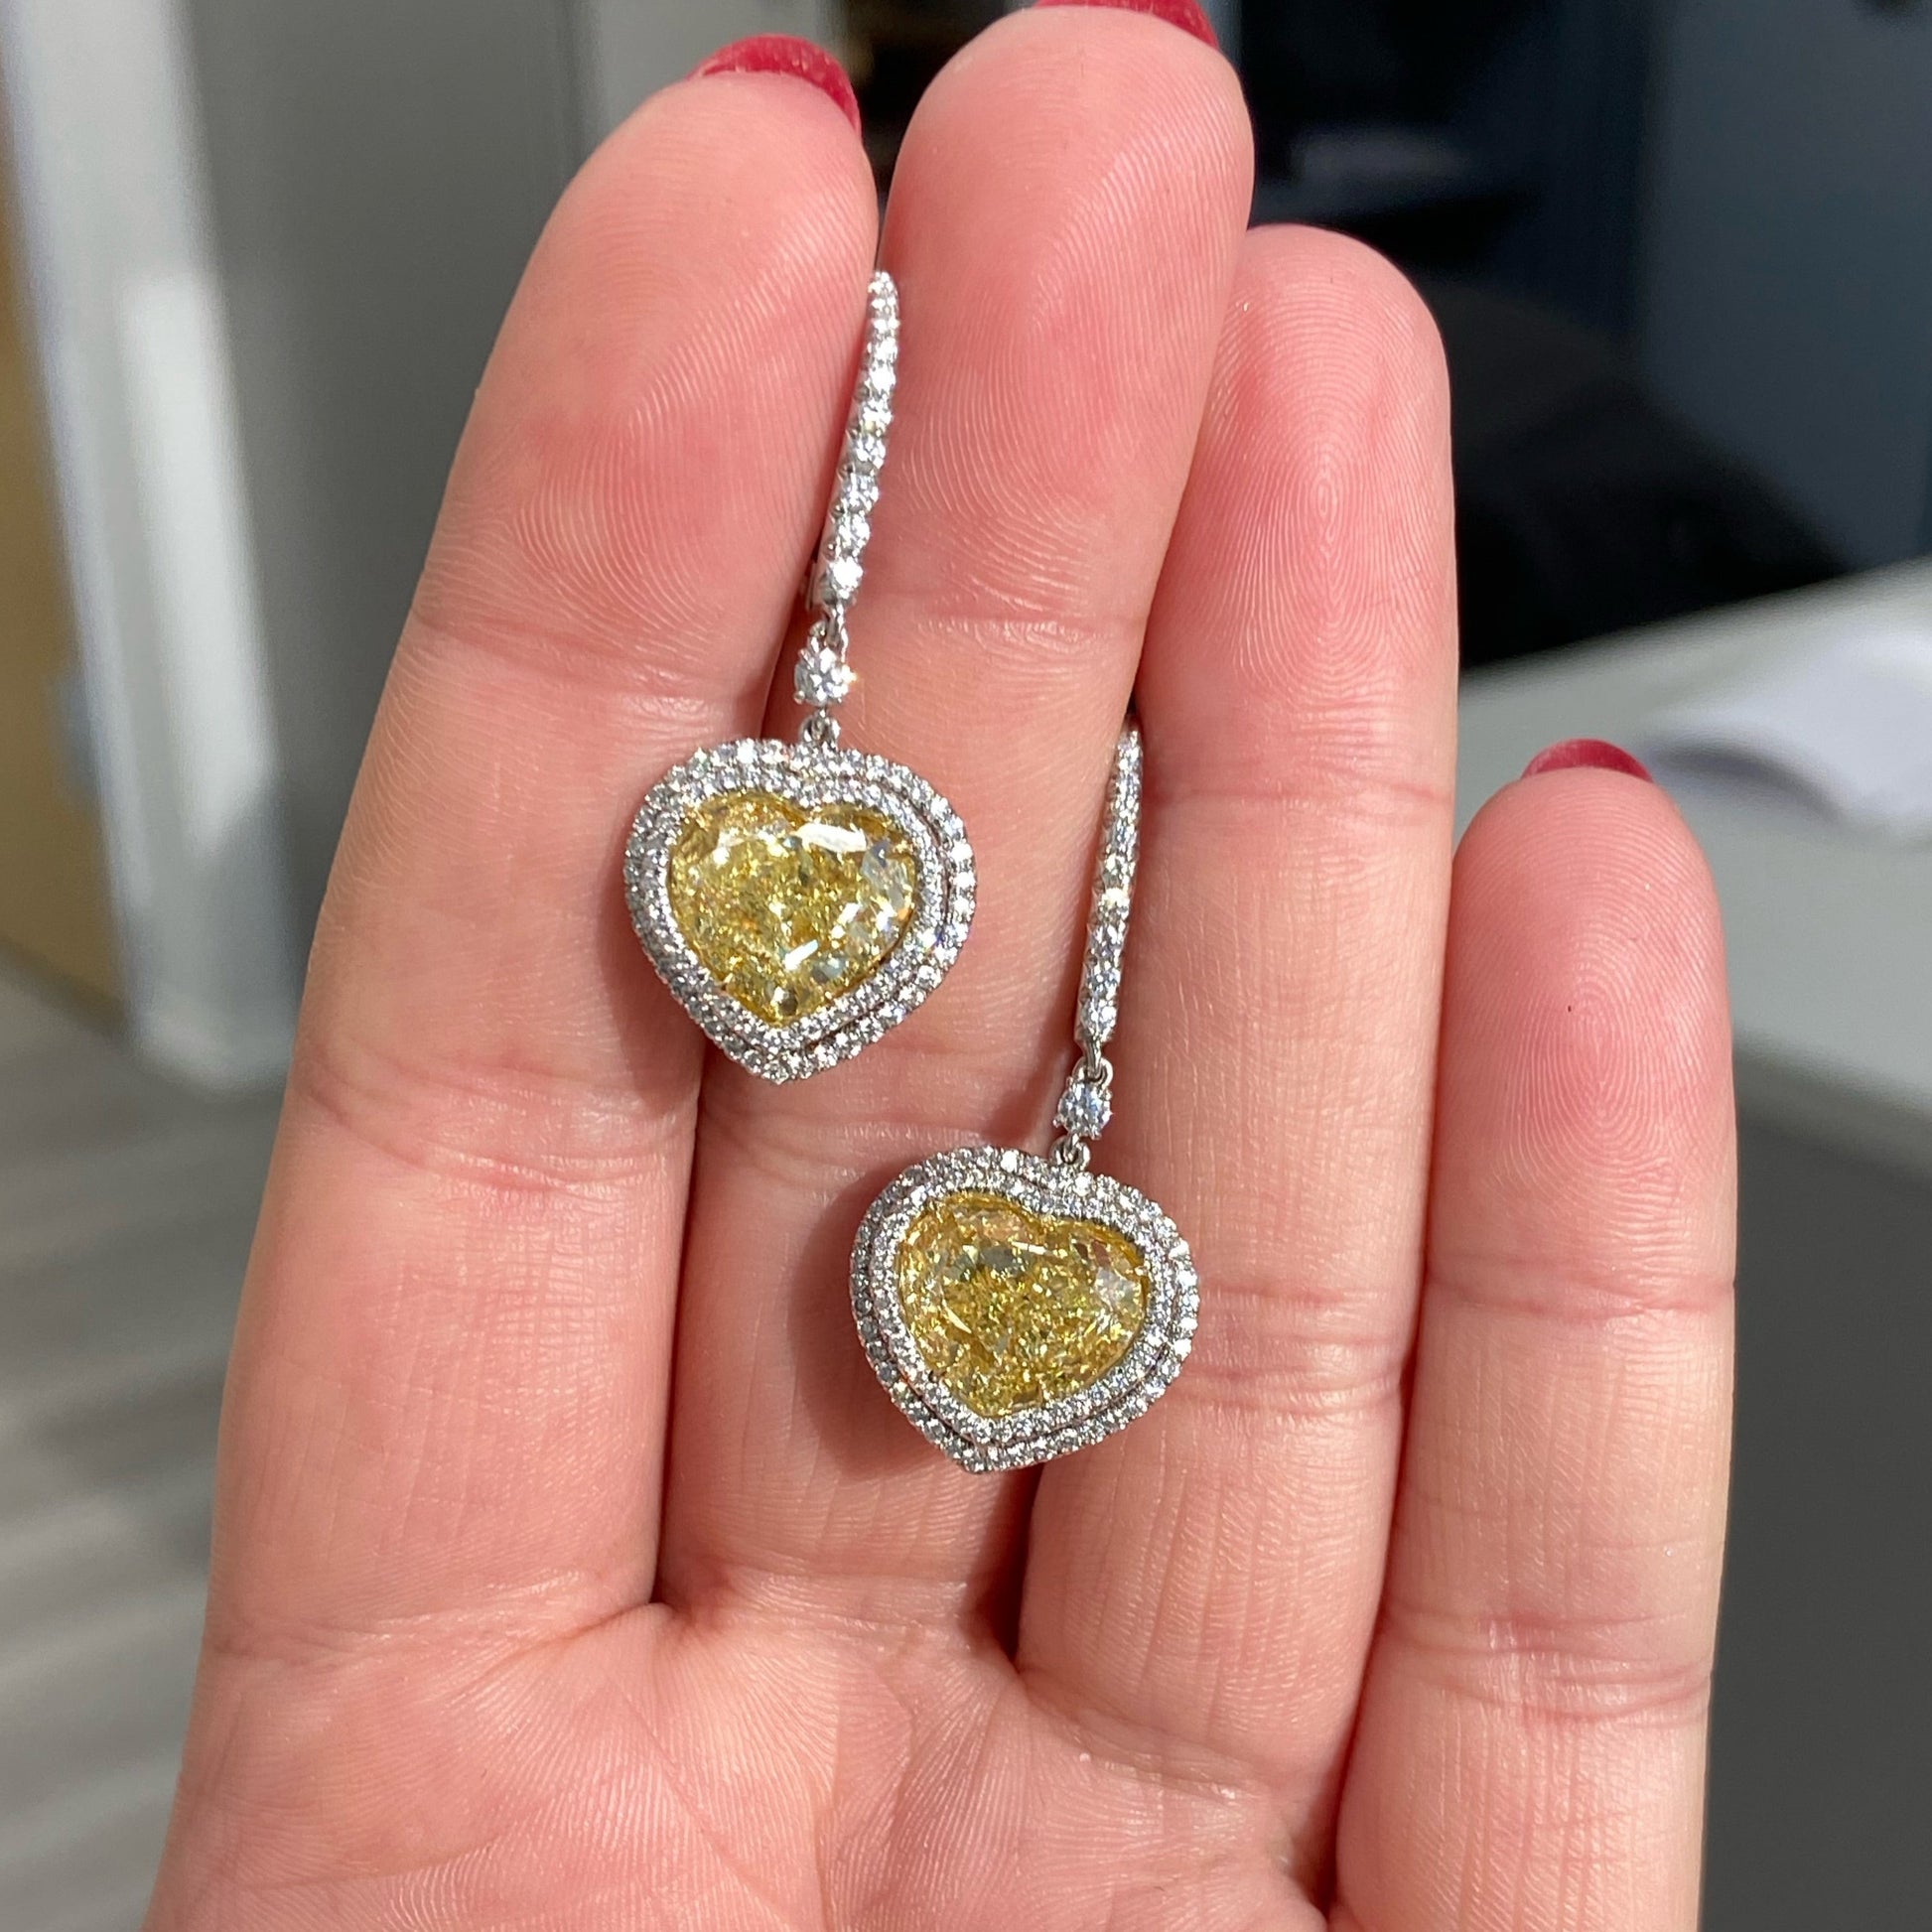 Red carpet yellow diamond earrings. Yellow heart diamond earrings. 10 carat yellow diamond earrings. Yellow diamond drop earrings. Diamond drop earrings. Luxury diamond earrings.